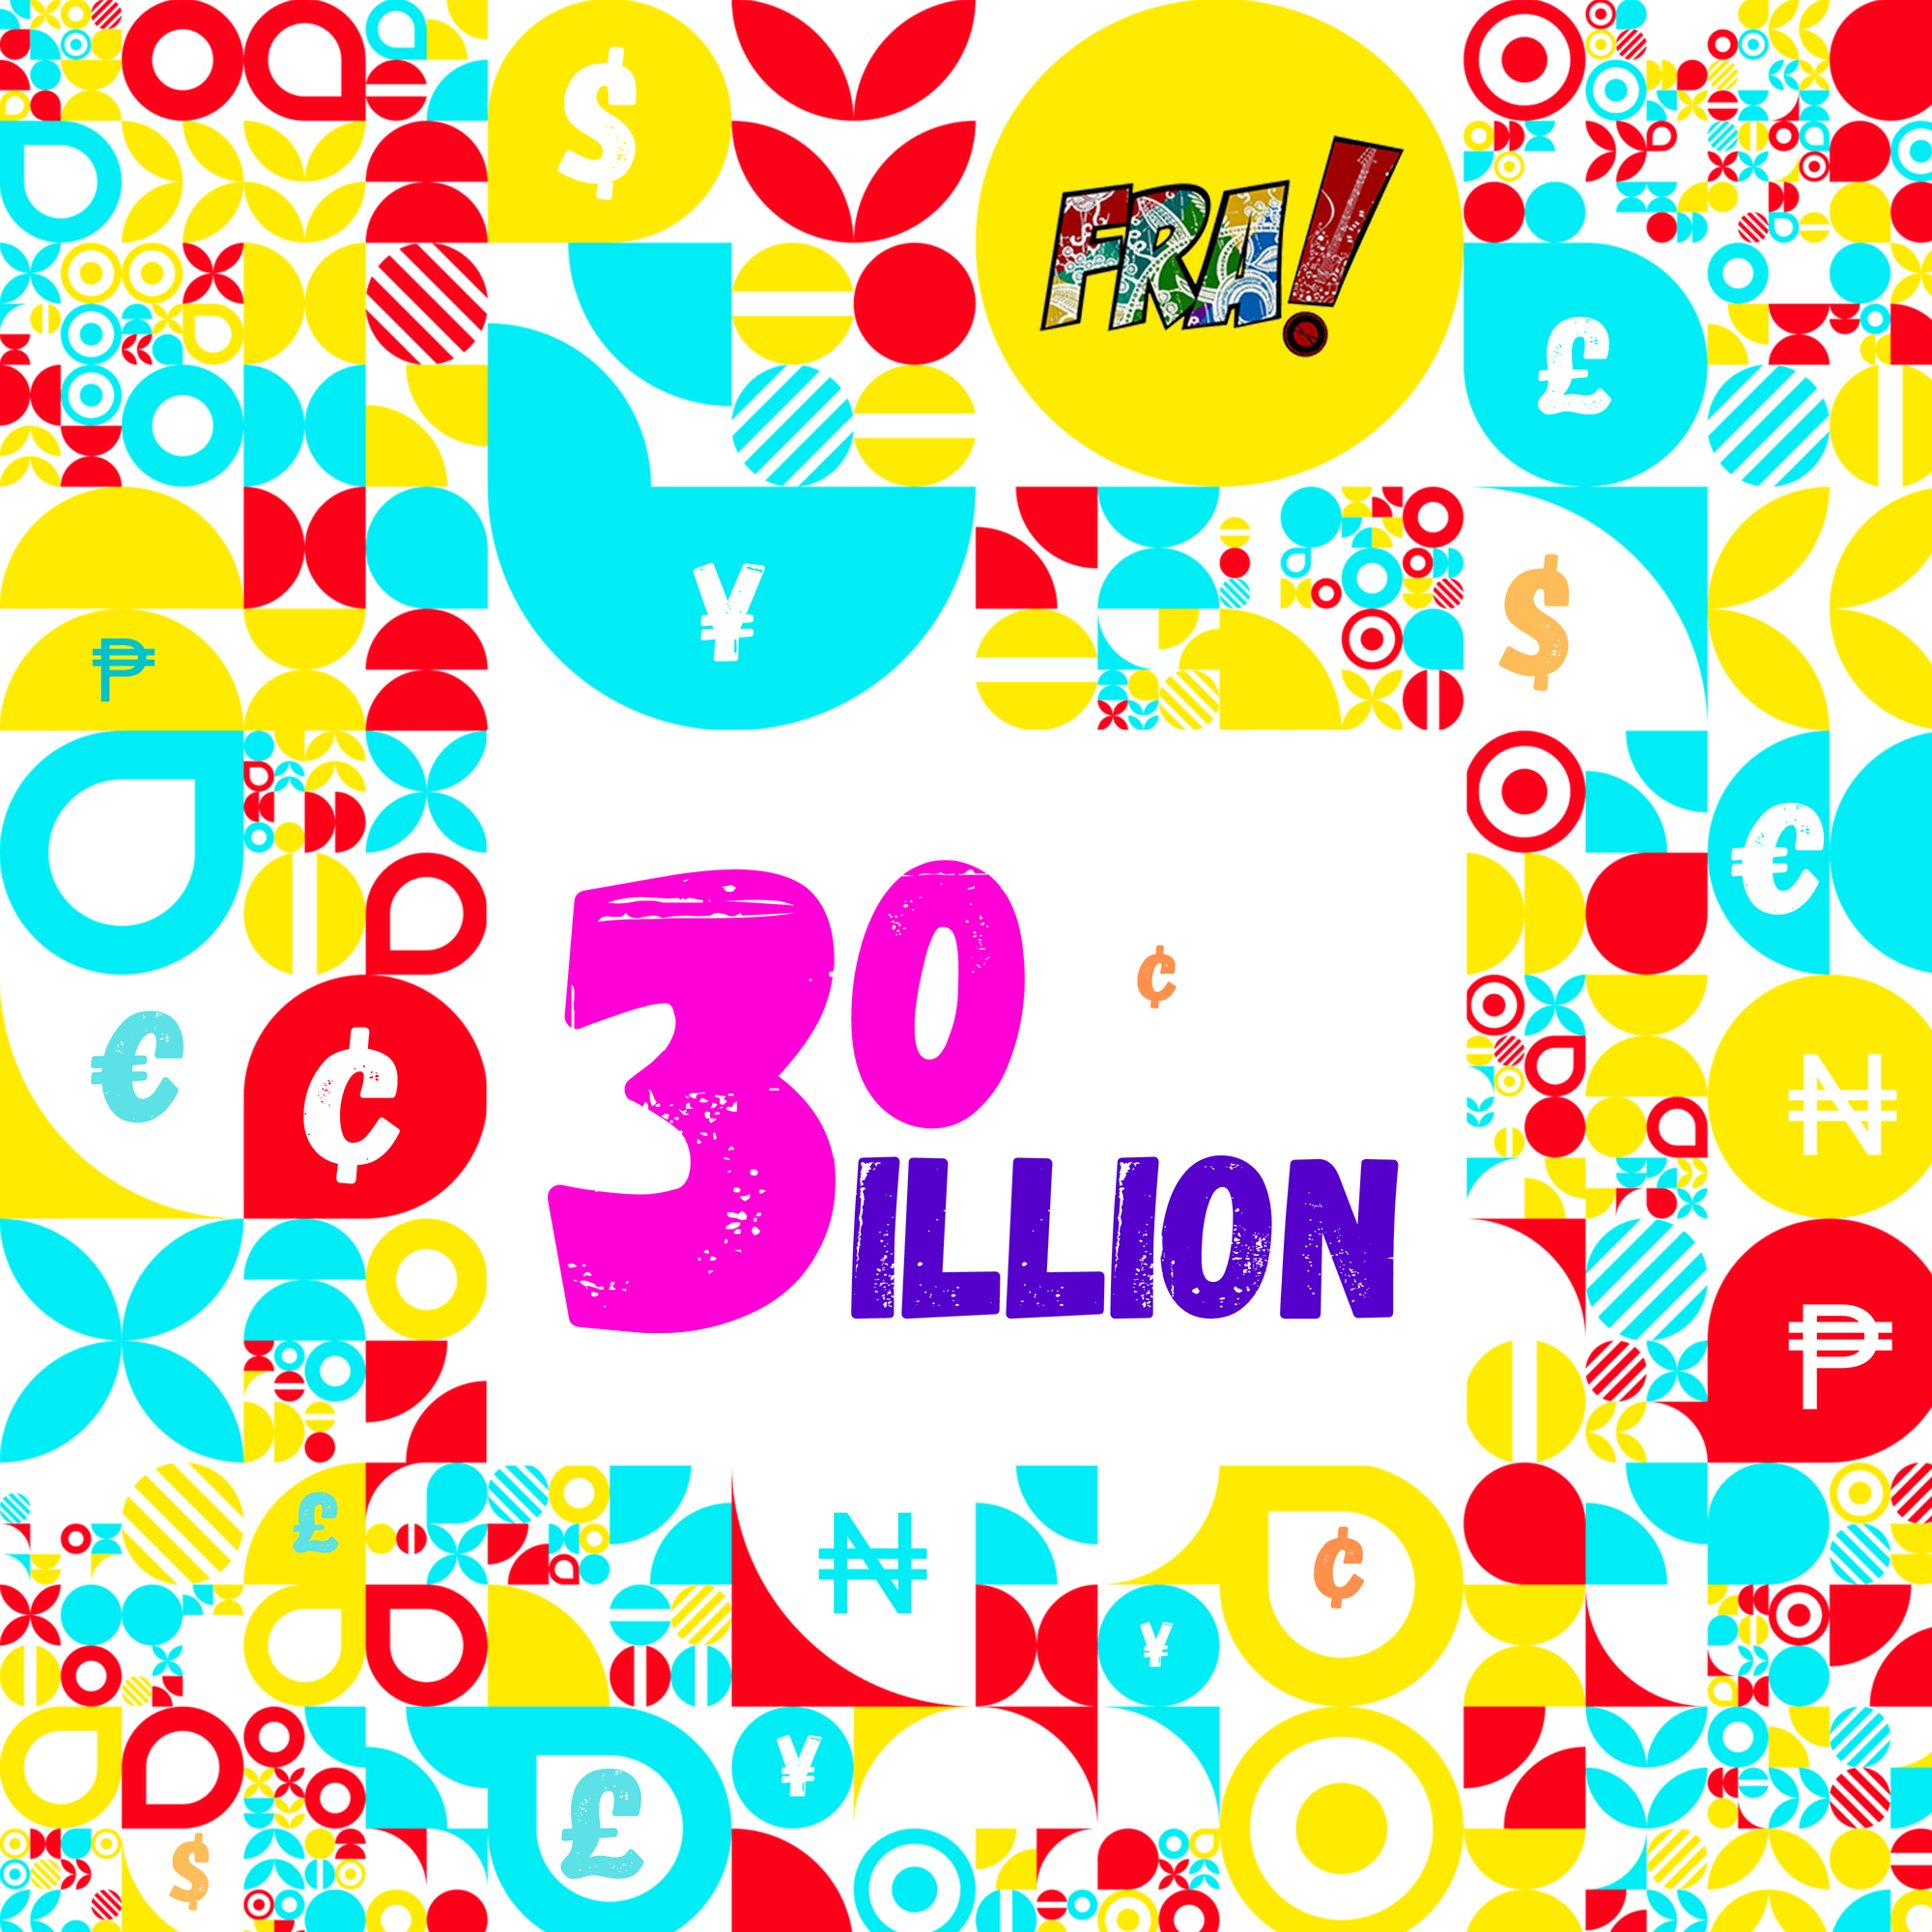 30 Billion by FRA!